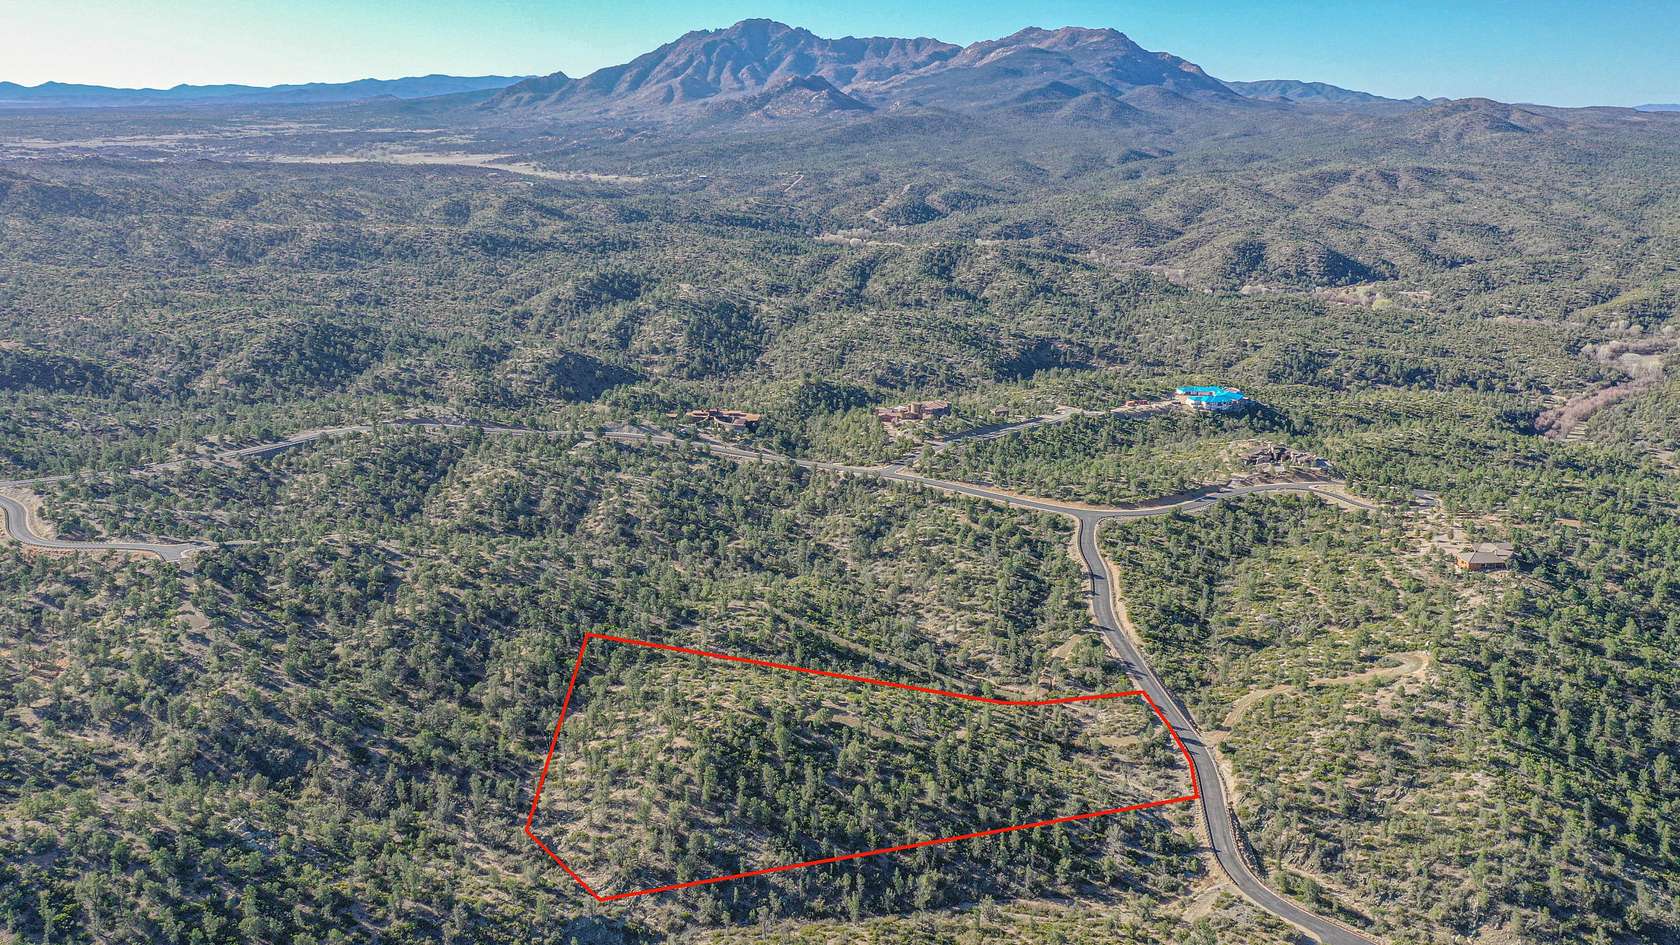 6.1 Acres of Residential Land for Sale in Prescott, Arizona